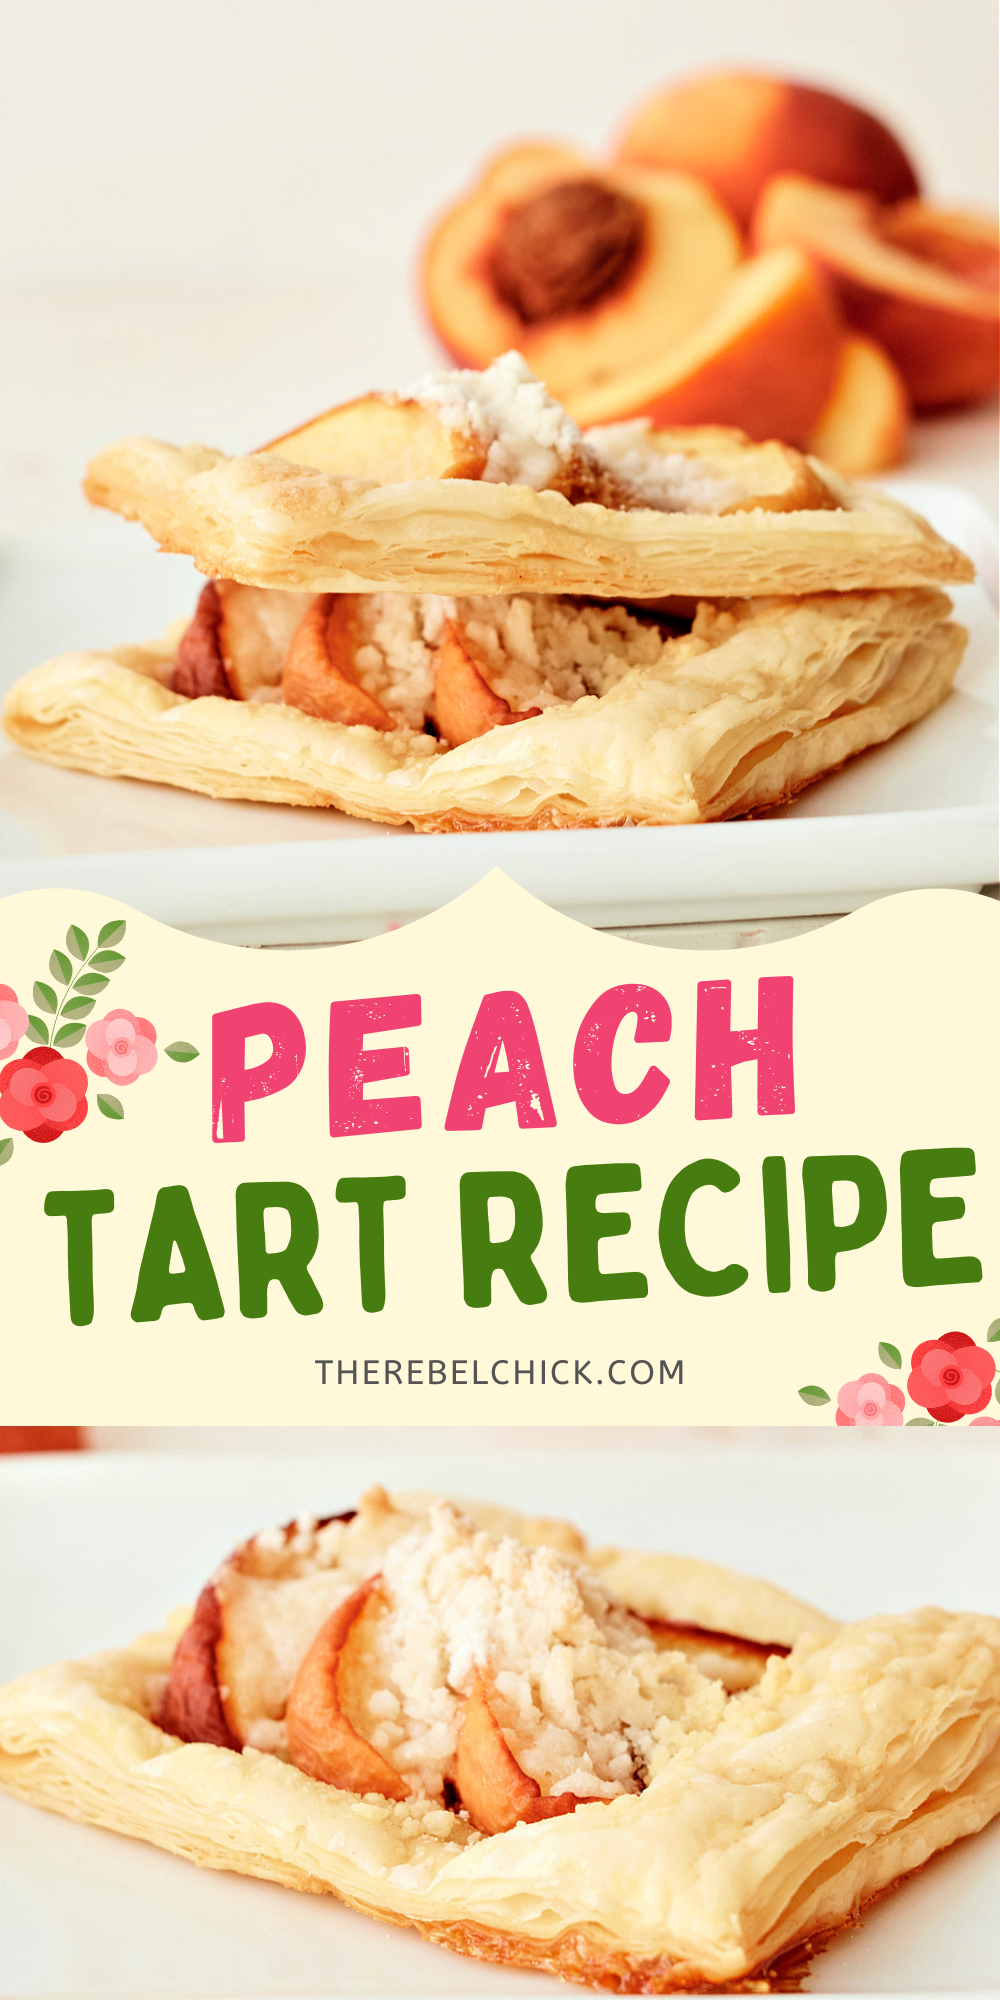 Peach Tart Recipe for Brunch